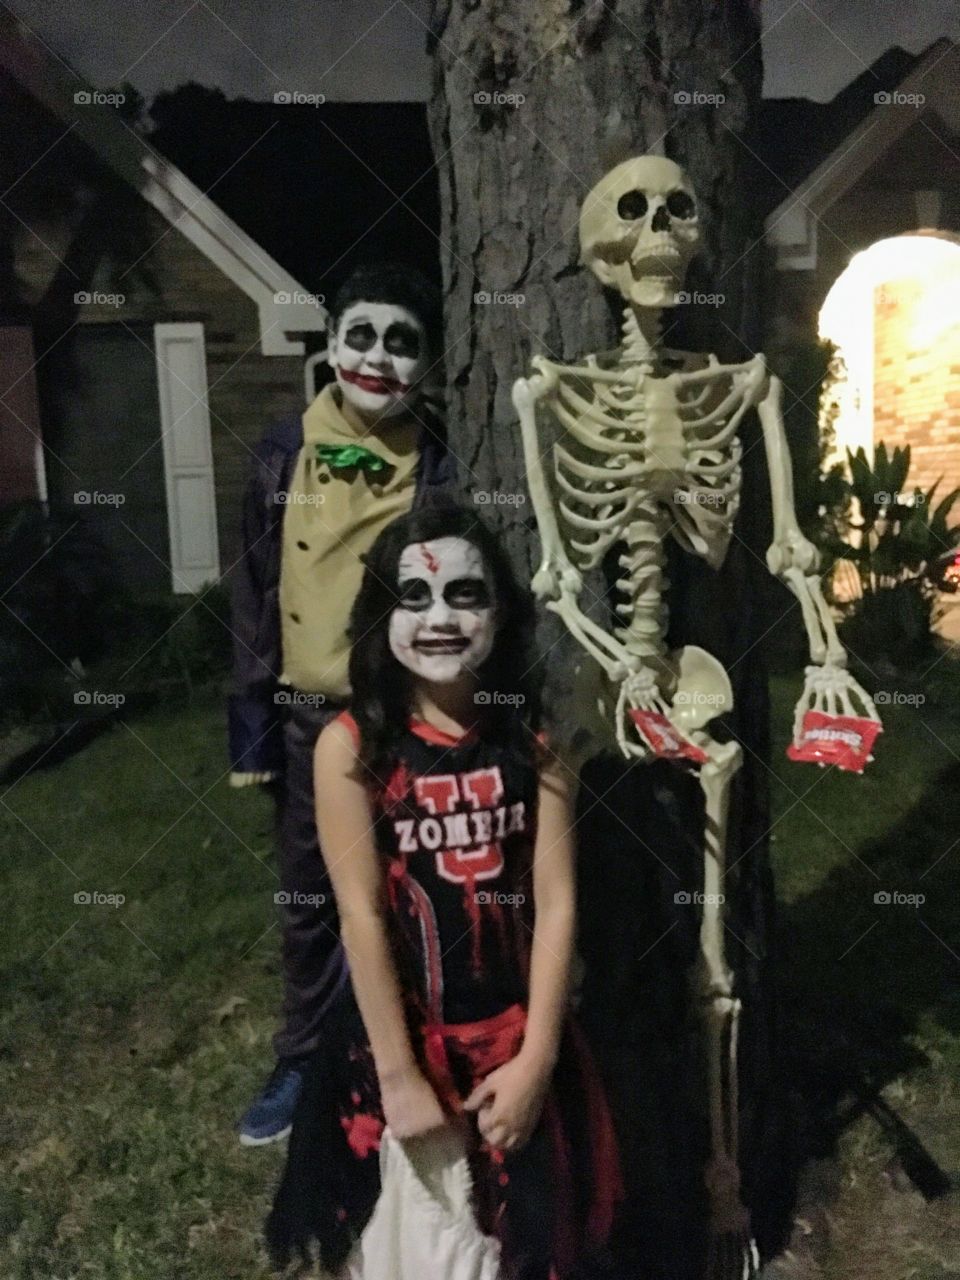 Halloween scares